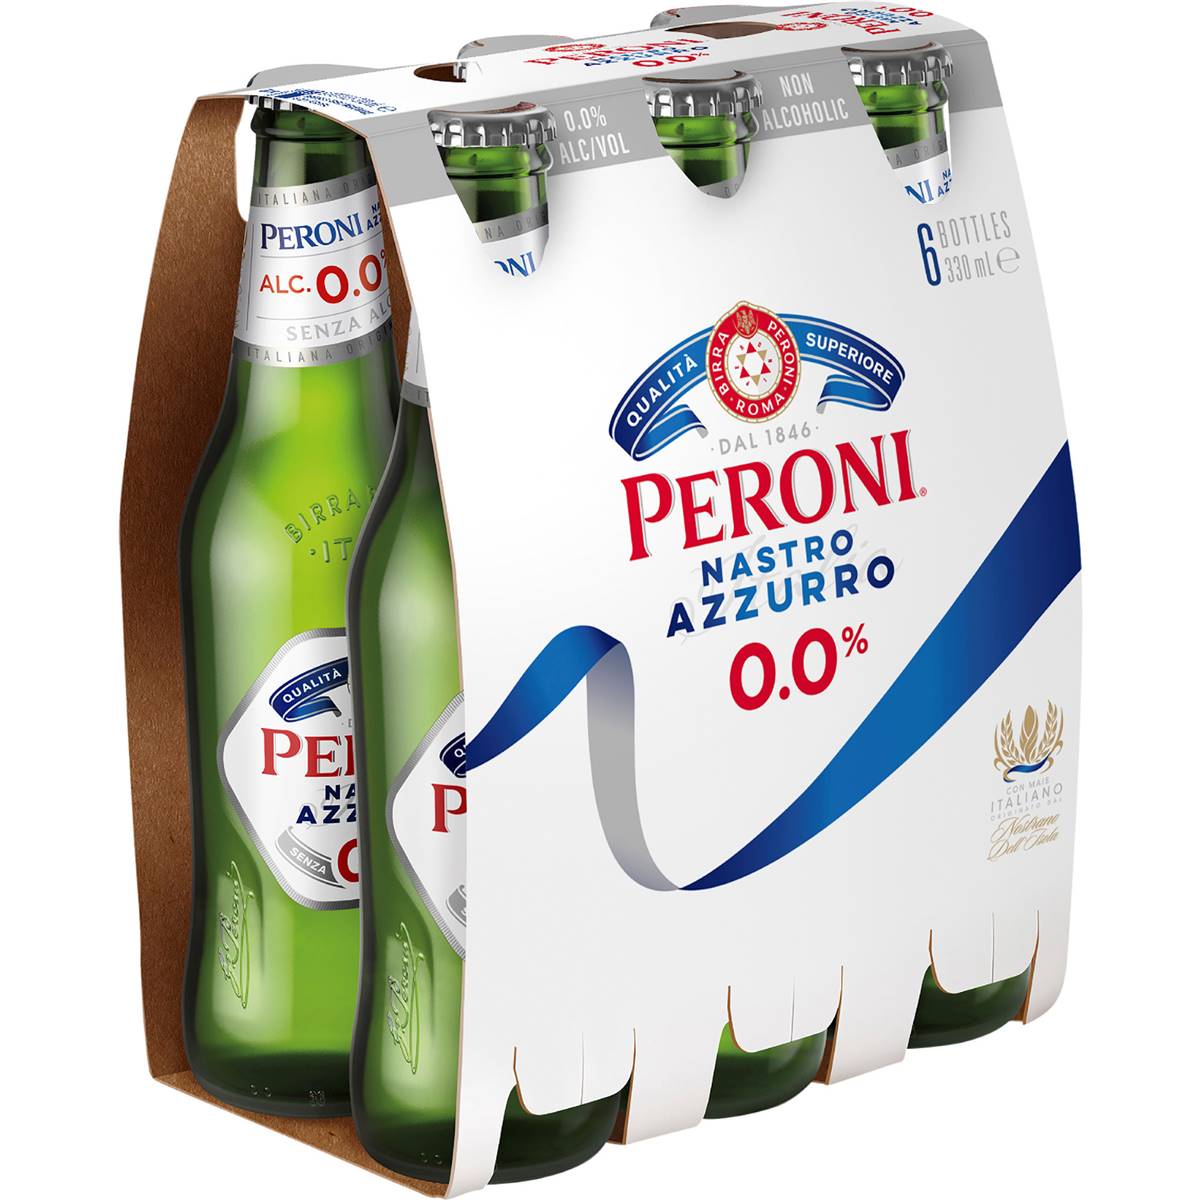 Peroni Nastro Azzurro 0% Beer Bottle 6x330ml